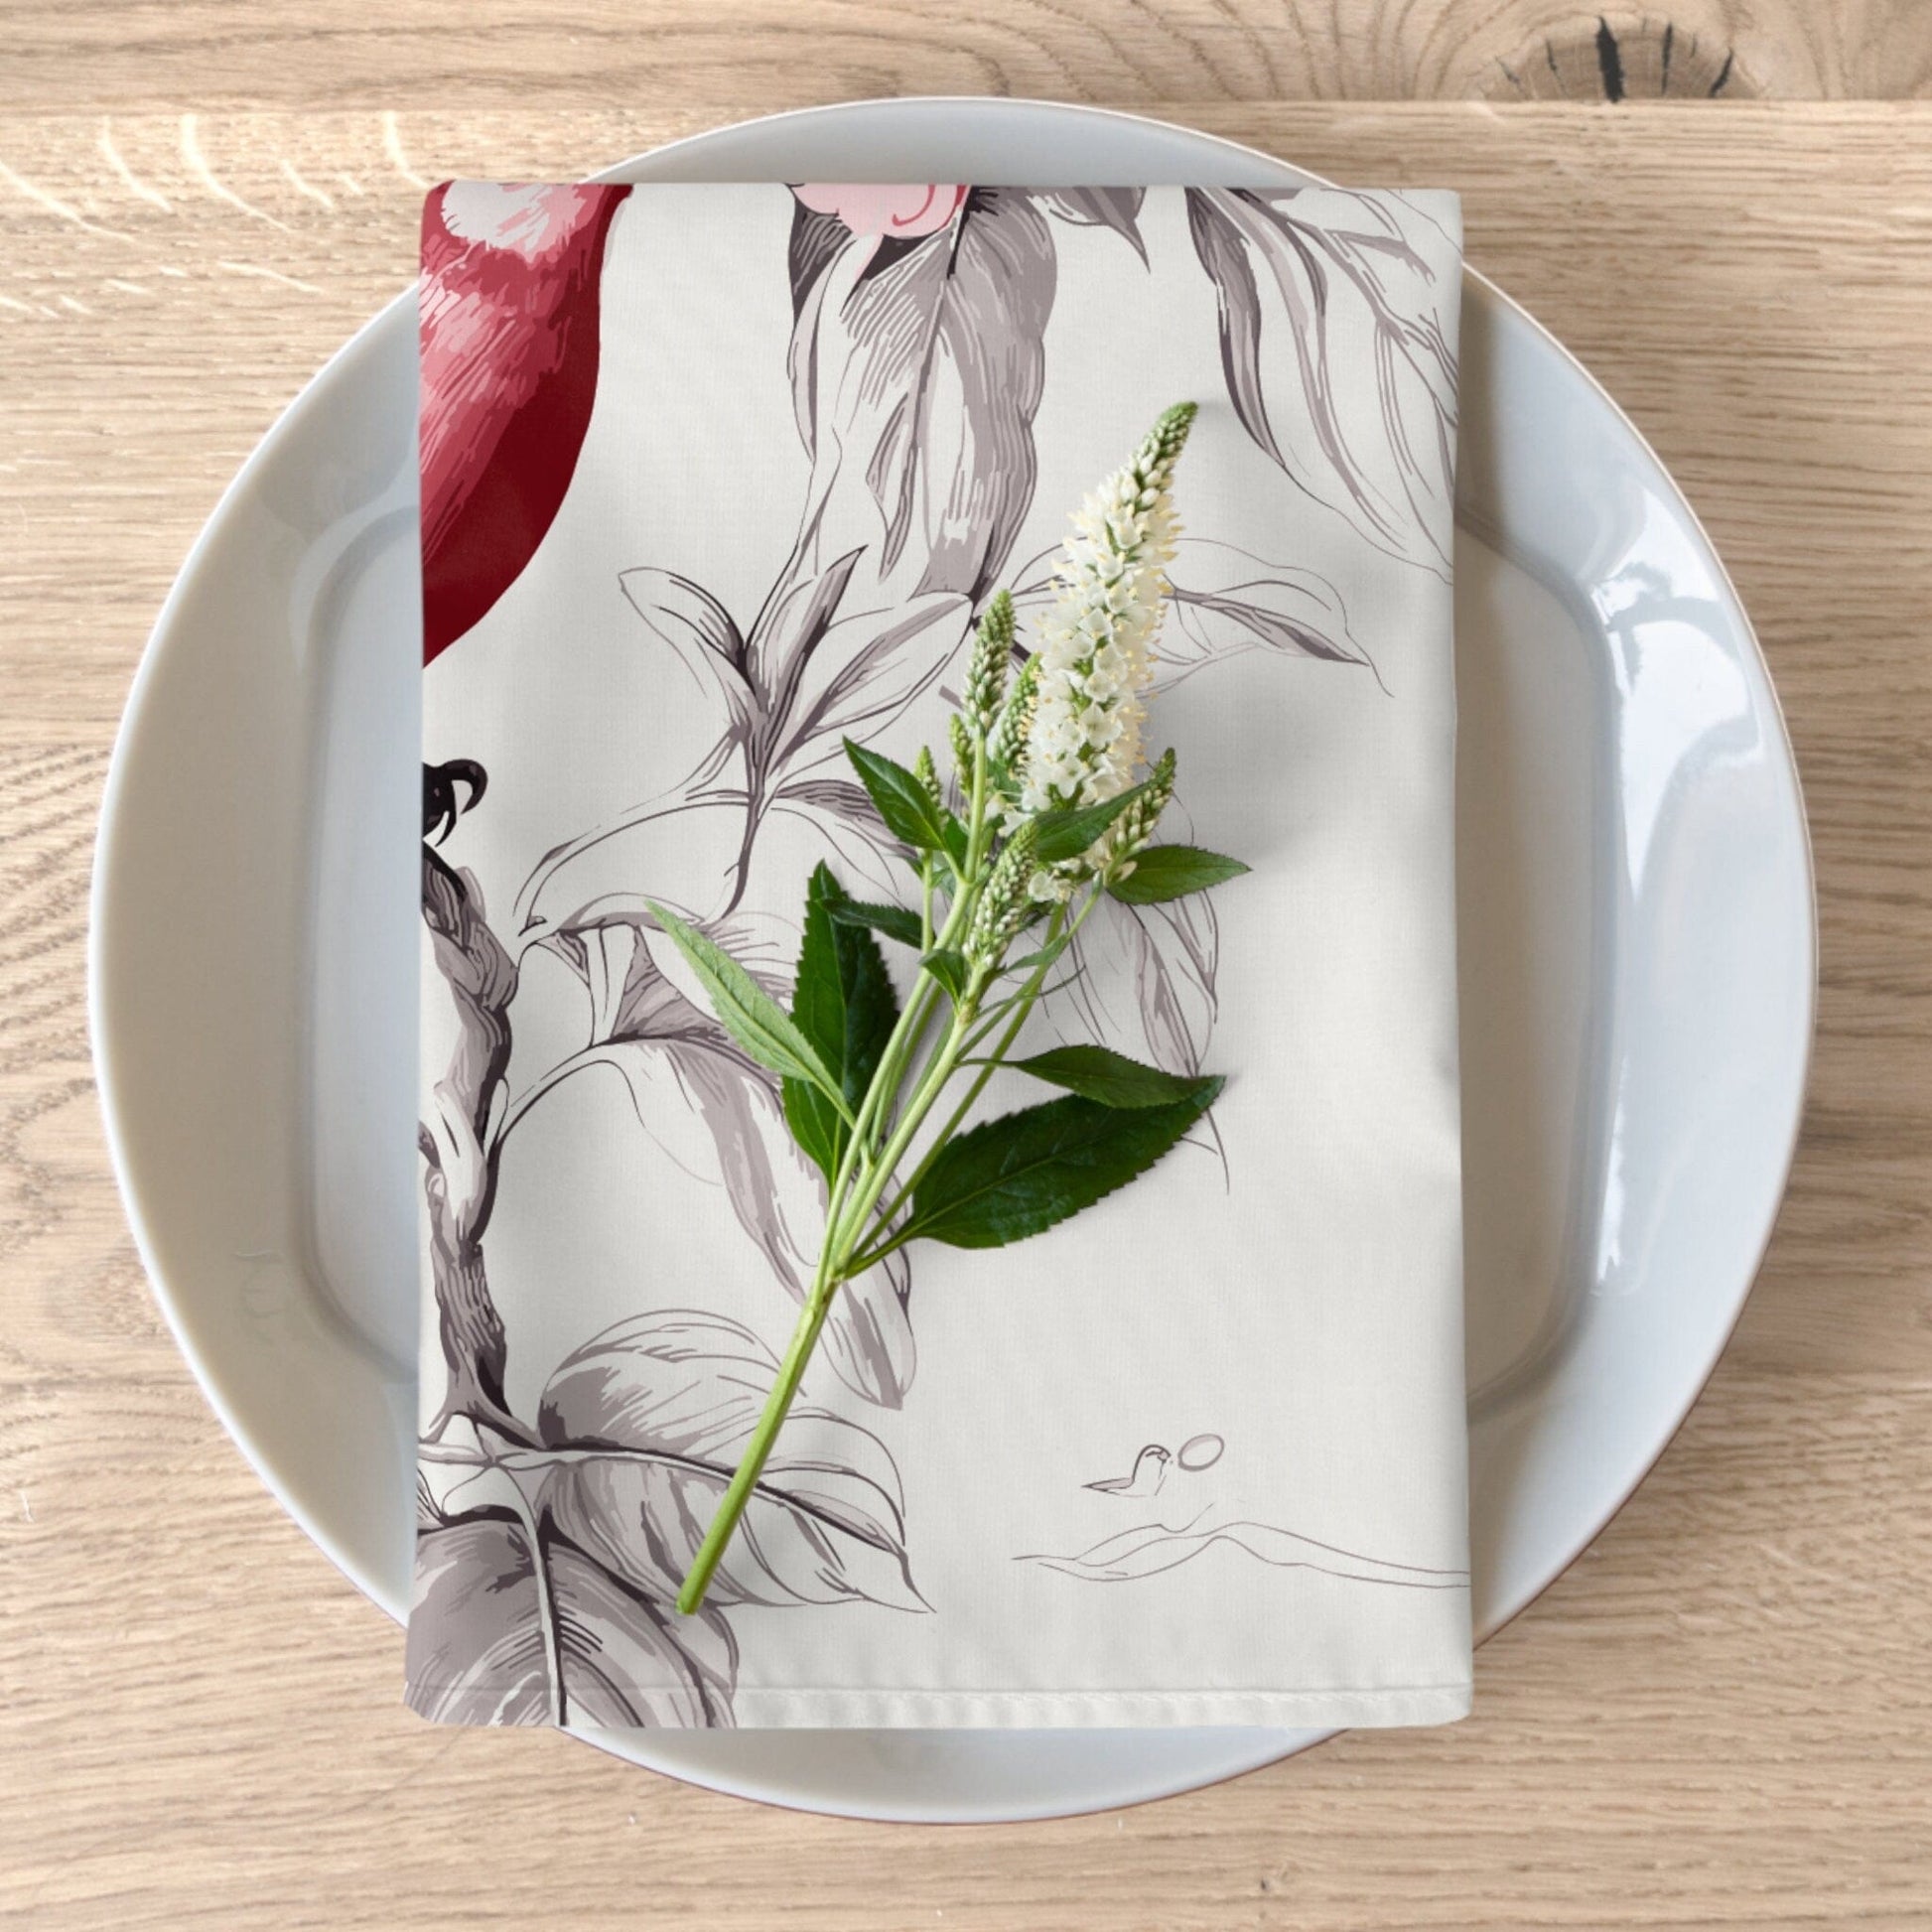 Kate McEnroe New York 4-Piece Set Chinoiserie Botanical Toile Floral Cranberry Red, White Cloth Napkin, Country Farmhouse Table Linen, Wedding Napkins - 132982823 Napkins 53700809840491352791